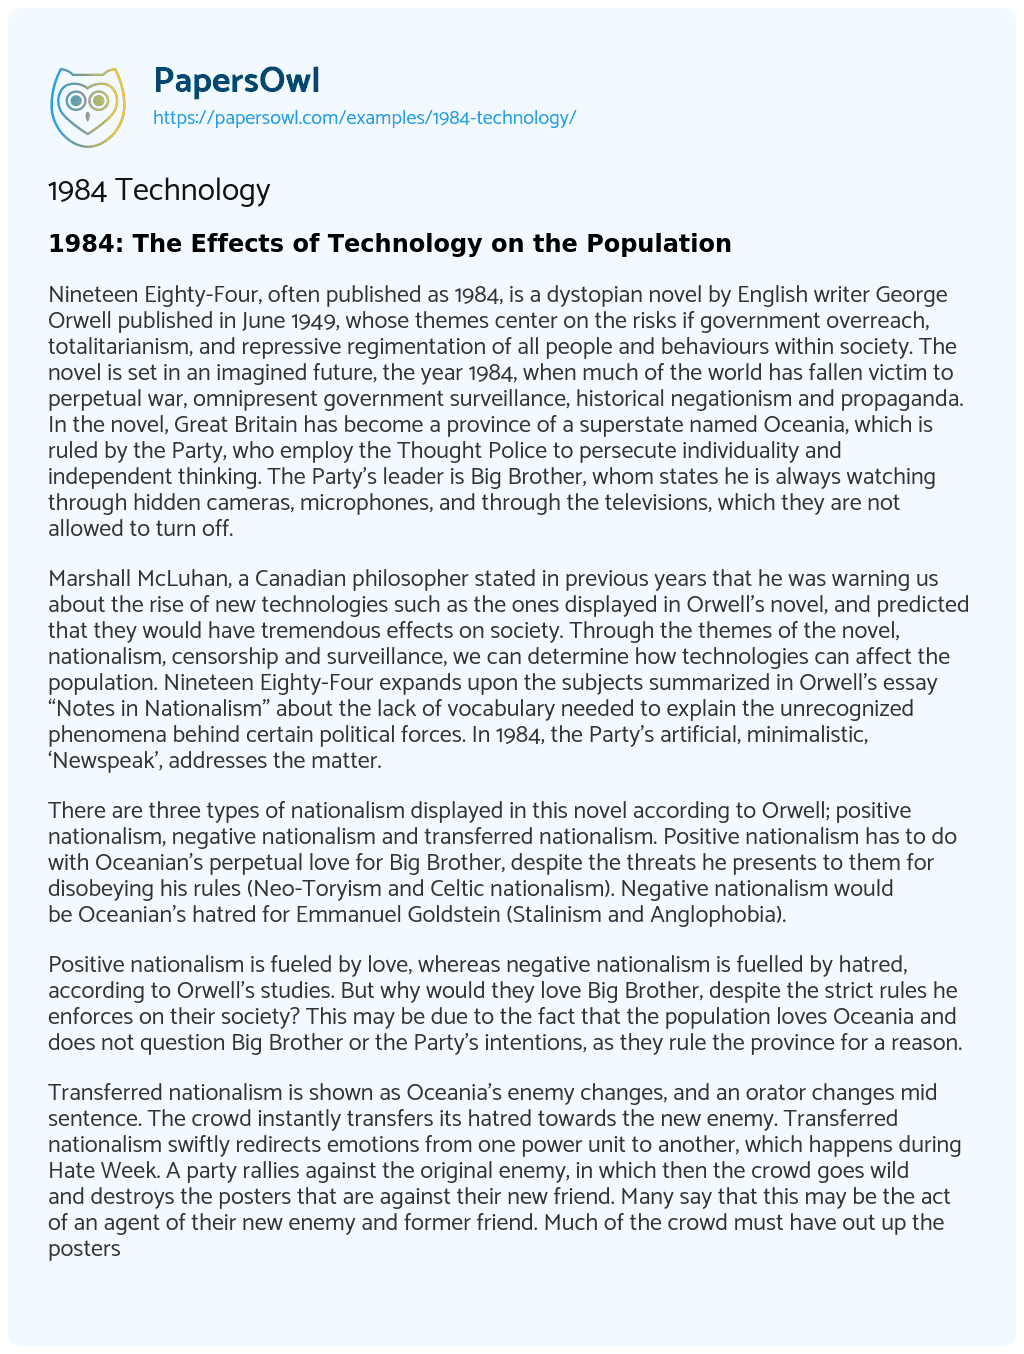 1984 Technology essay